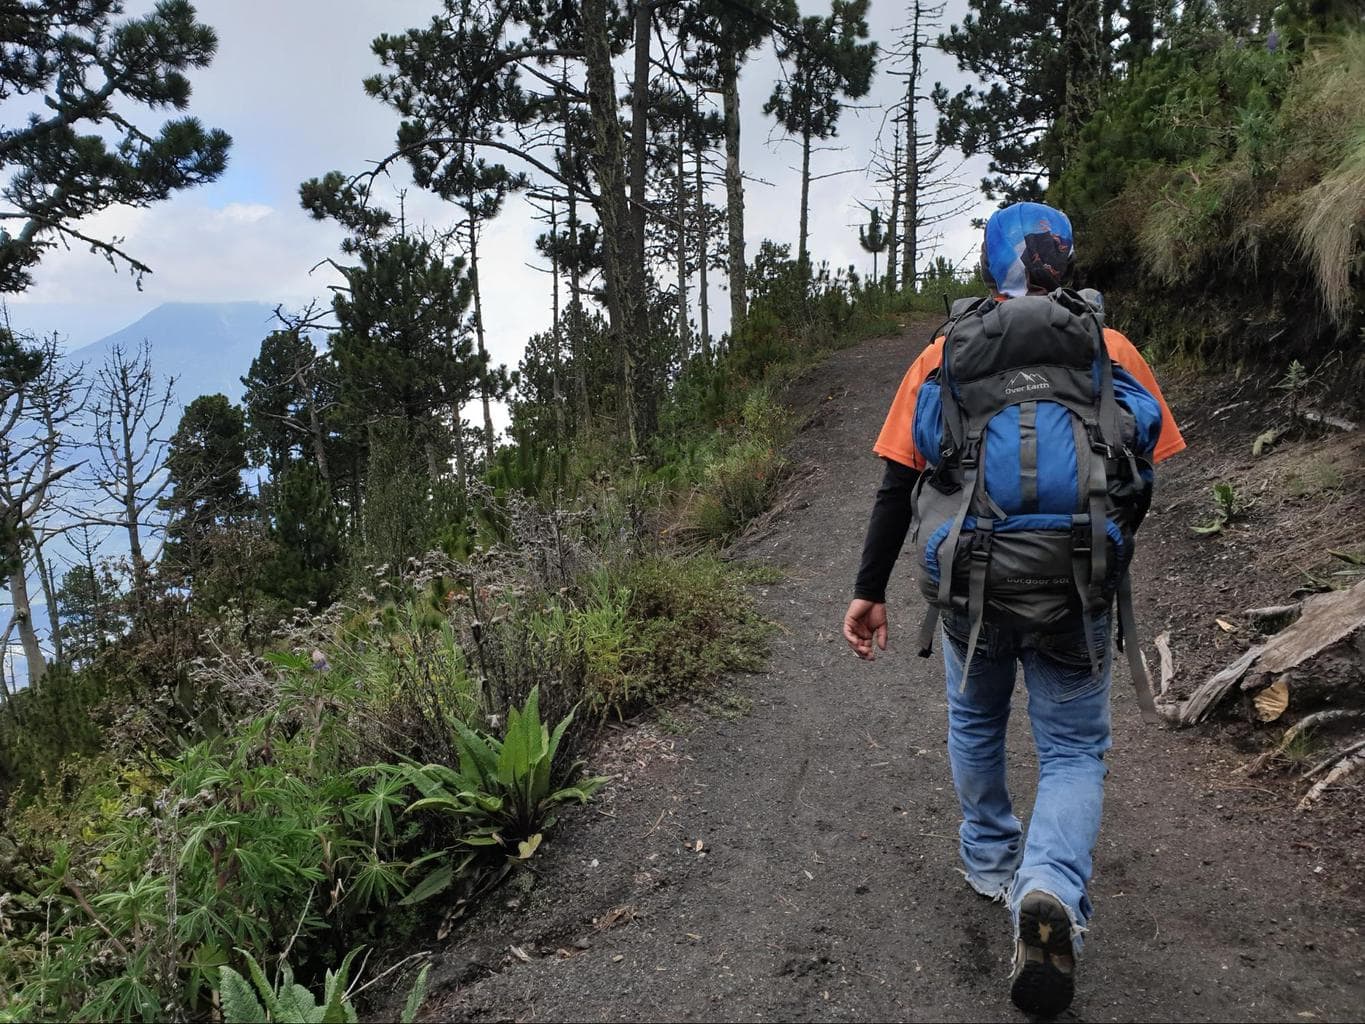 The guide hiking up Acatenango Volcano